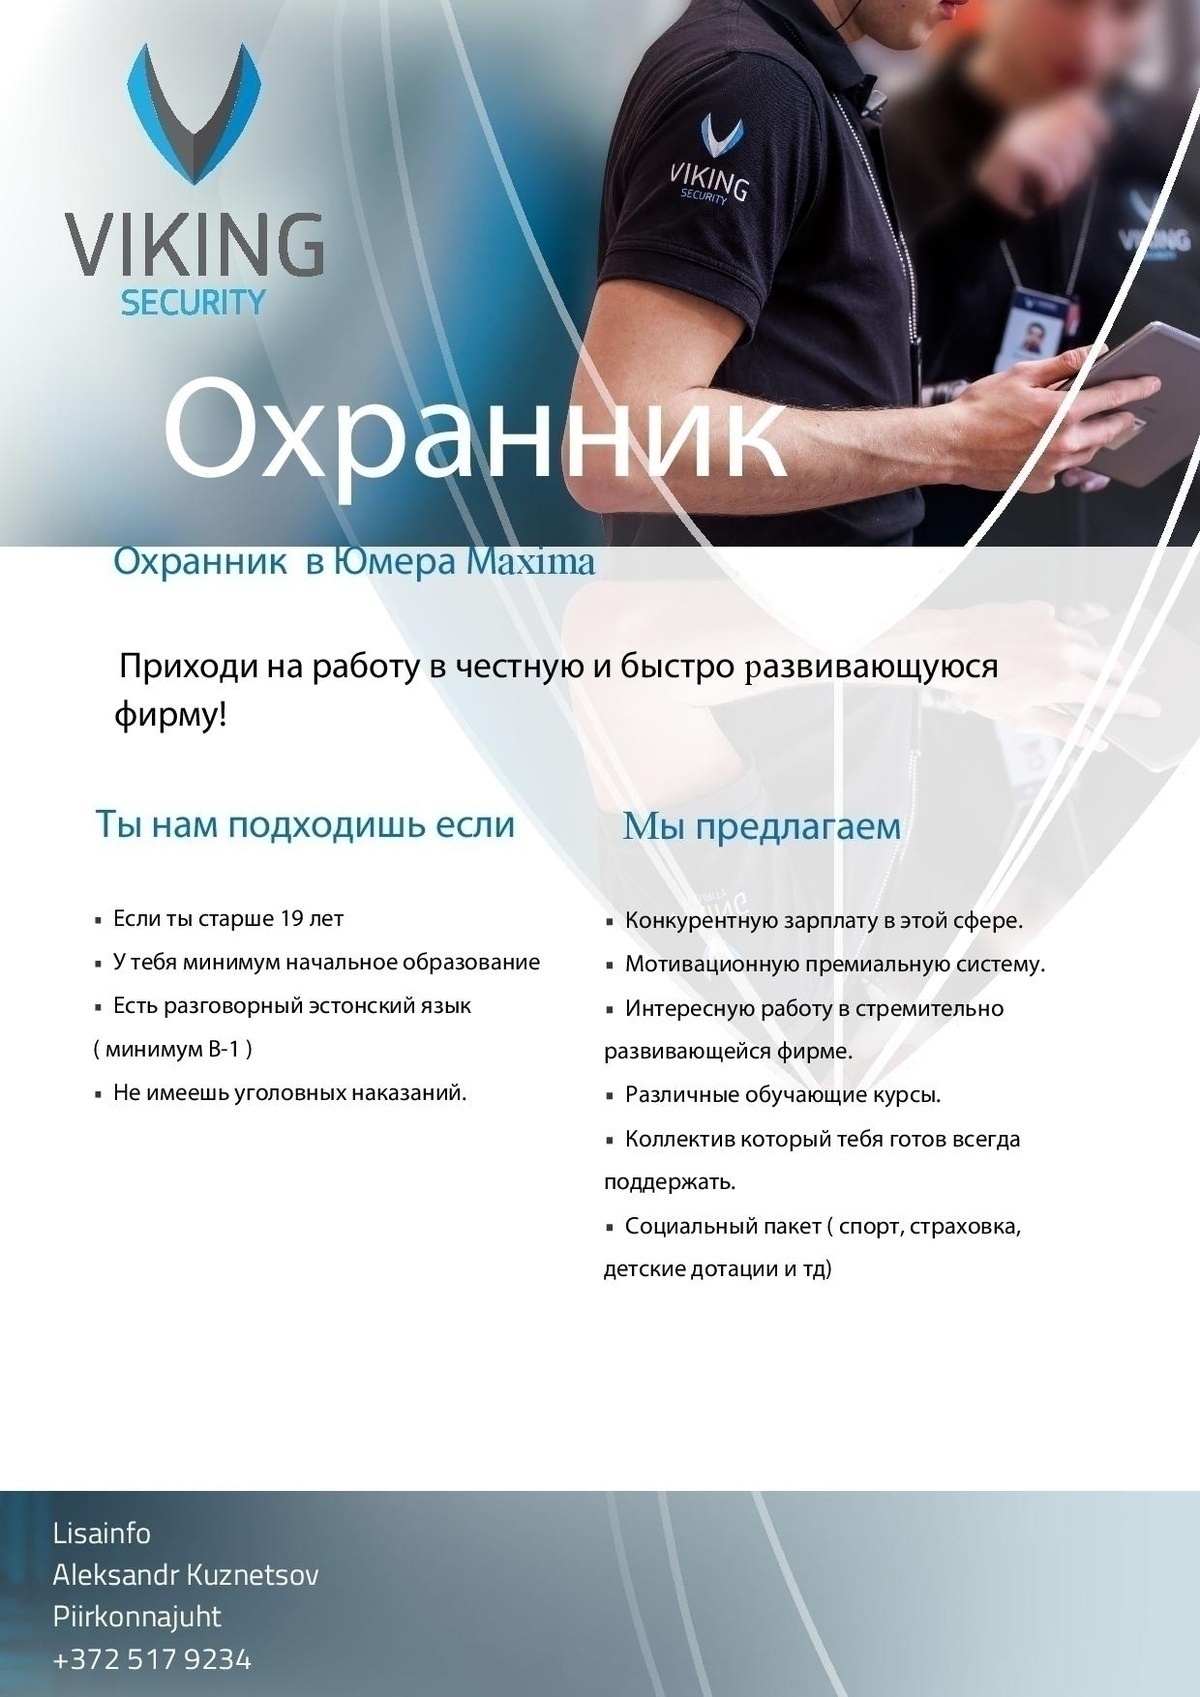 Viking Security AS Охранник в Юмера Maxima! Зарплата начиная от 1000 евро!